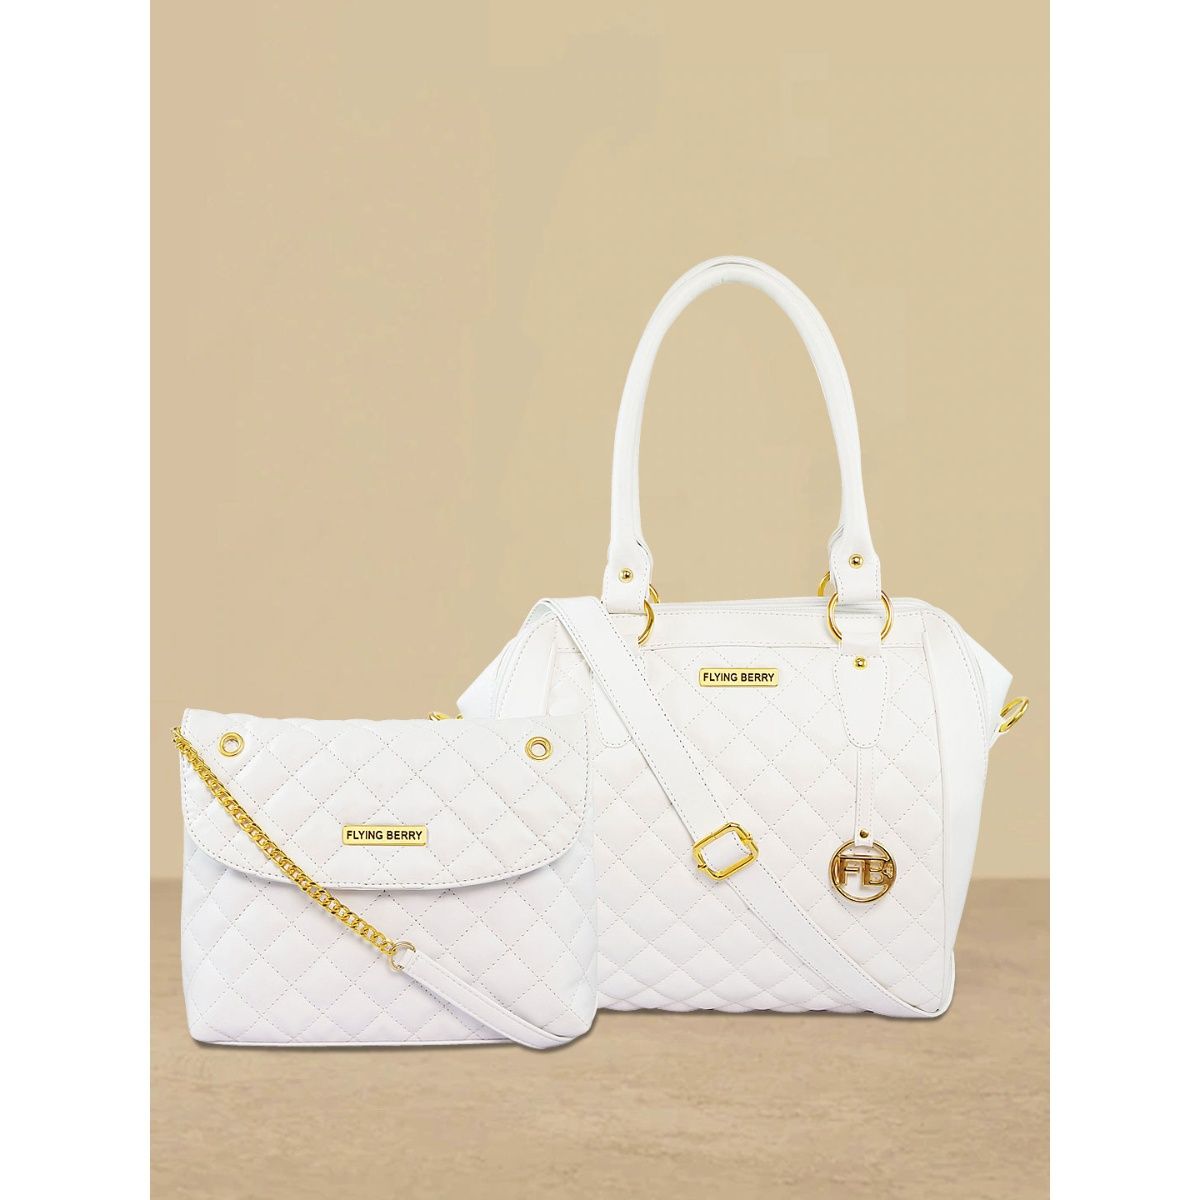 Beige Handbag combo Set of 3 For Girls and Ladies | Classycarry